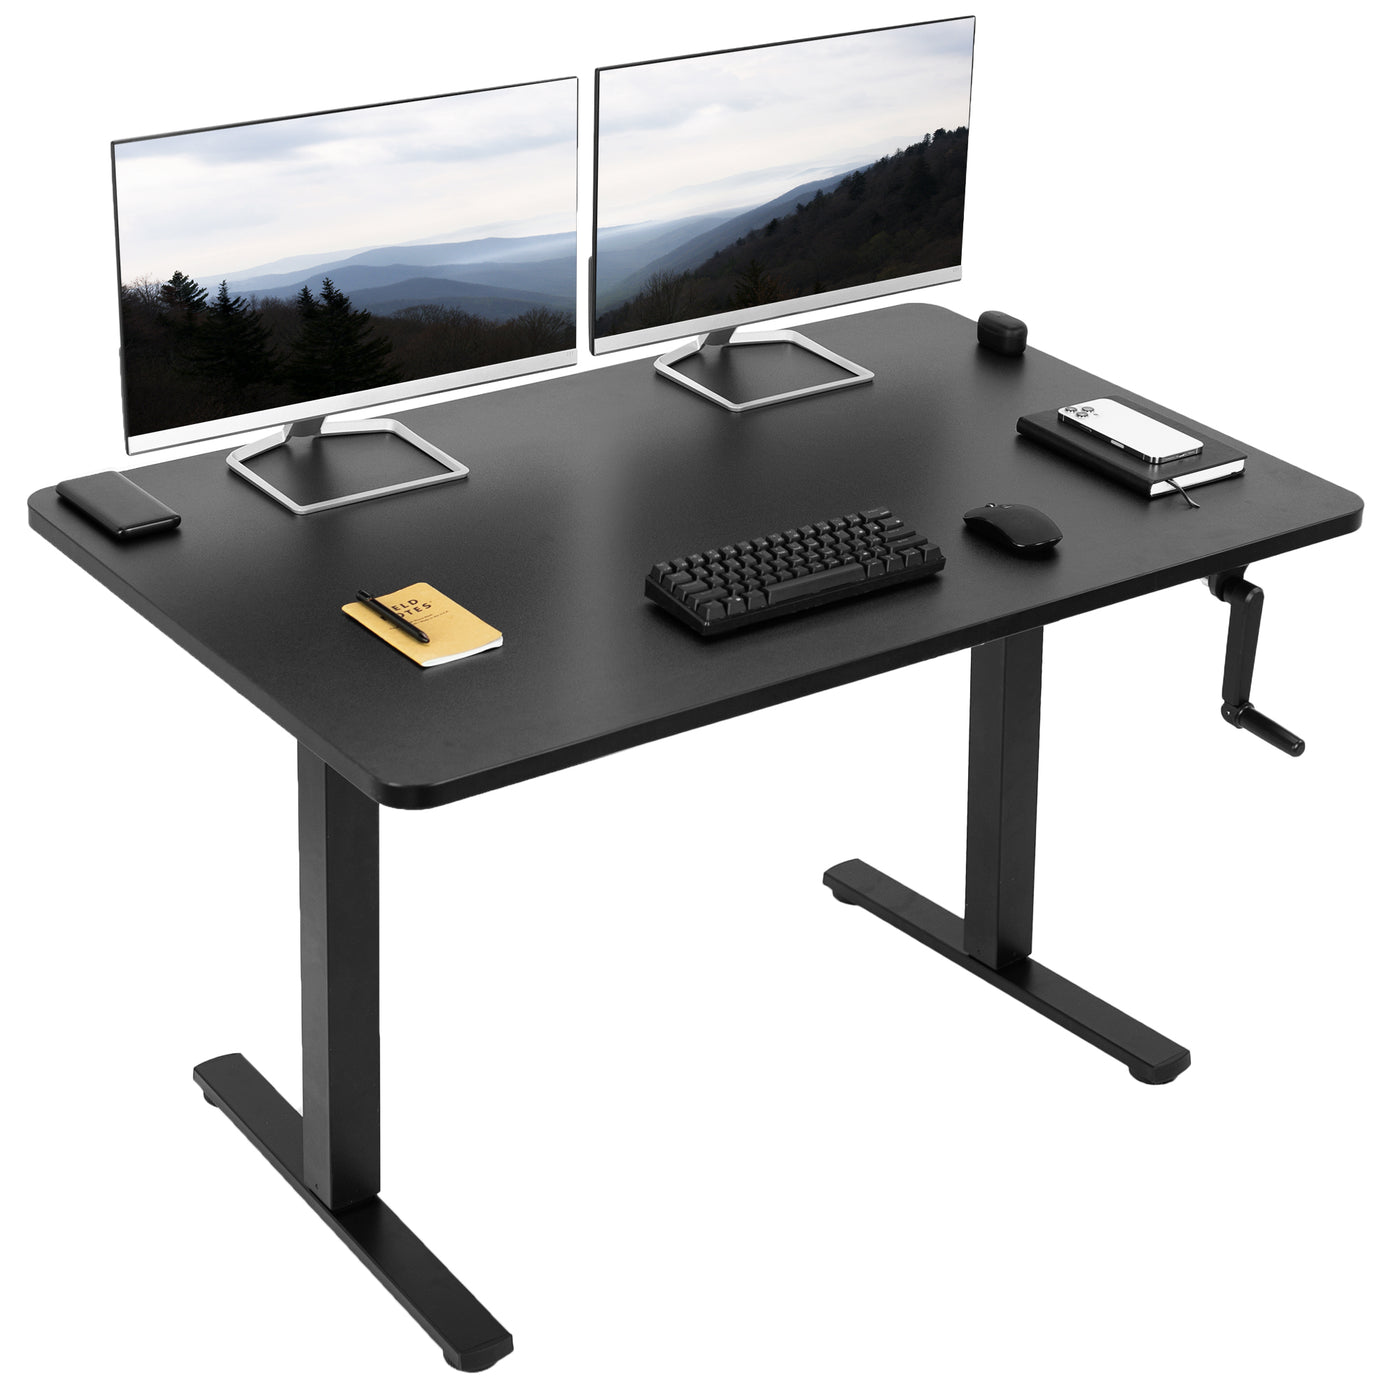 Black manual height adjustable desk with side crank handle.